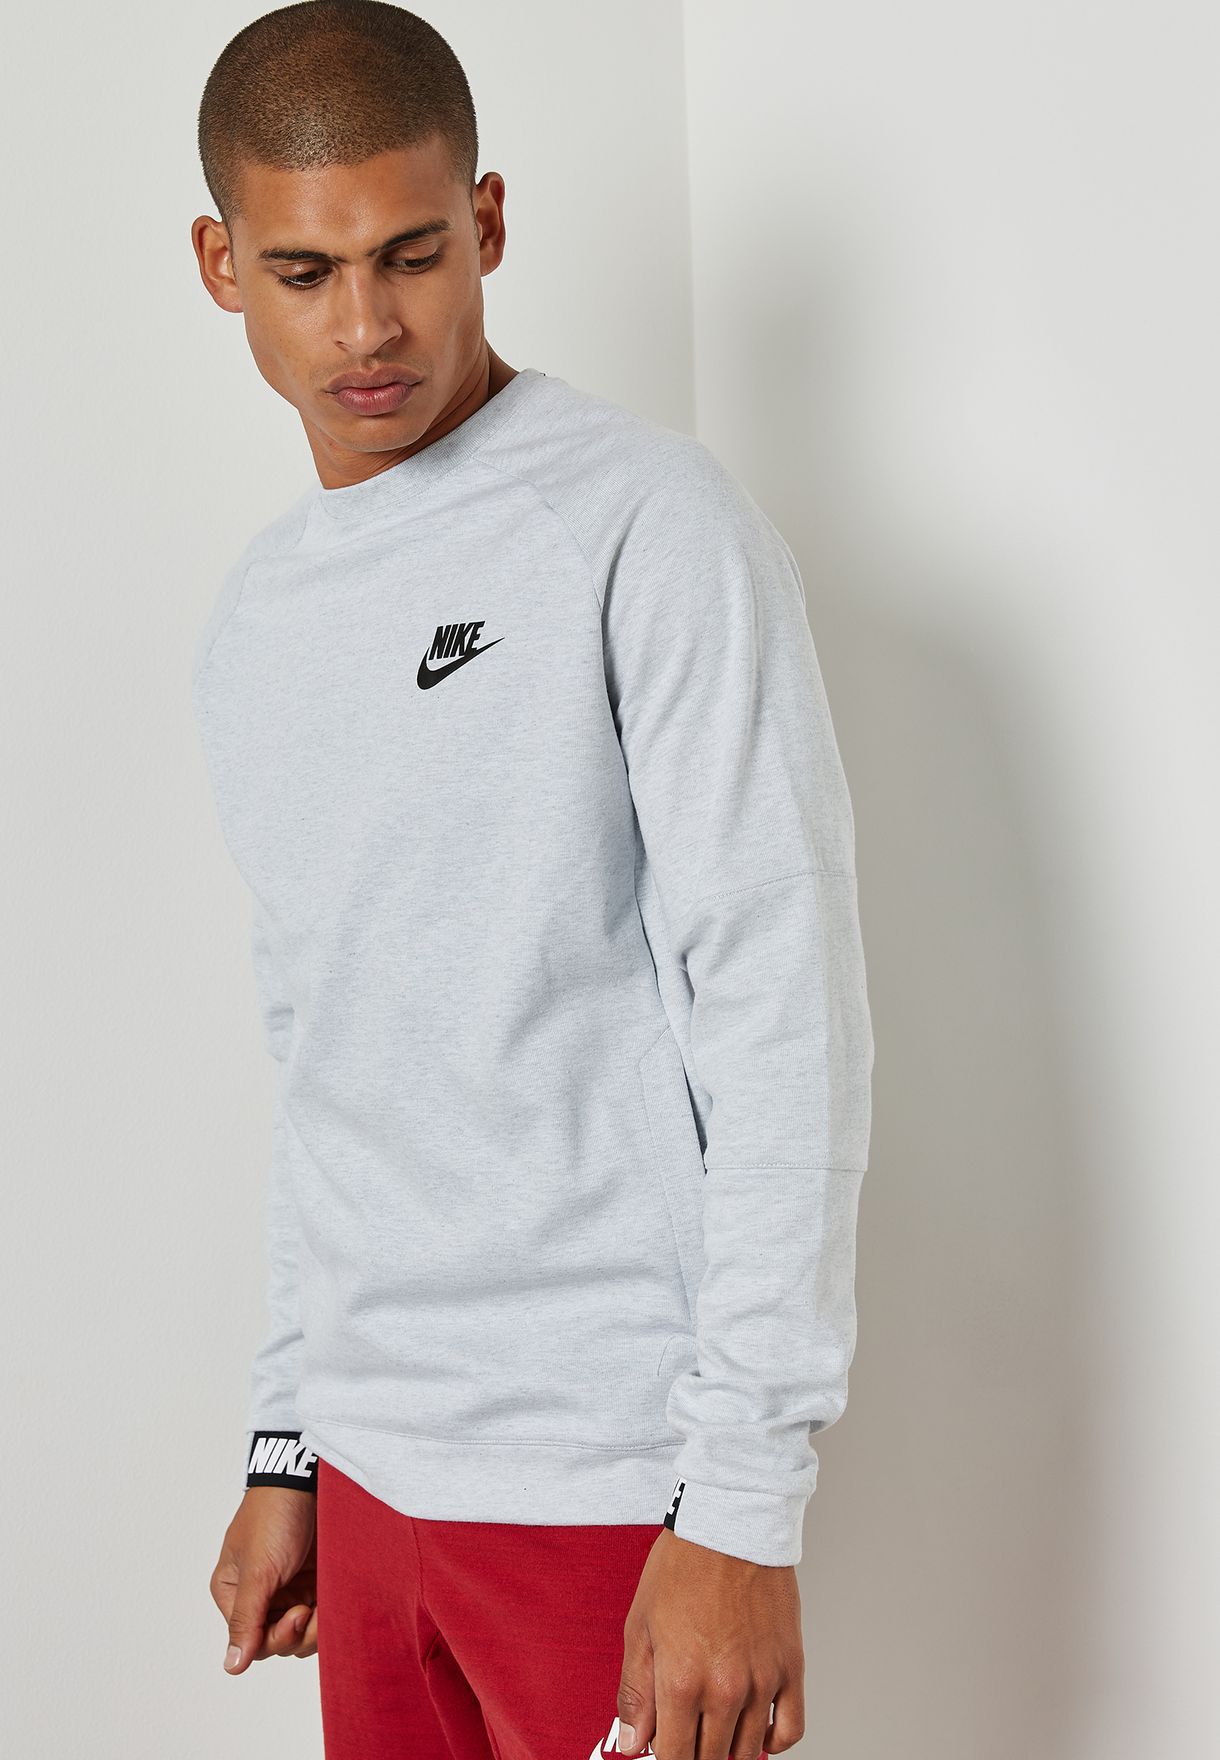 Buy Nike White Av15 Fleece Sweatshirt For Men In Mena Worldwide 861744 051 [ 1760 x 1220 Pixel ]